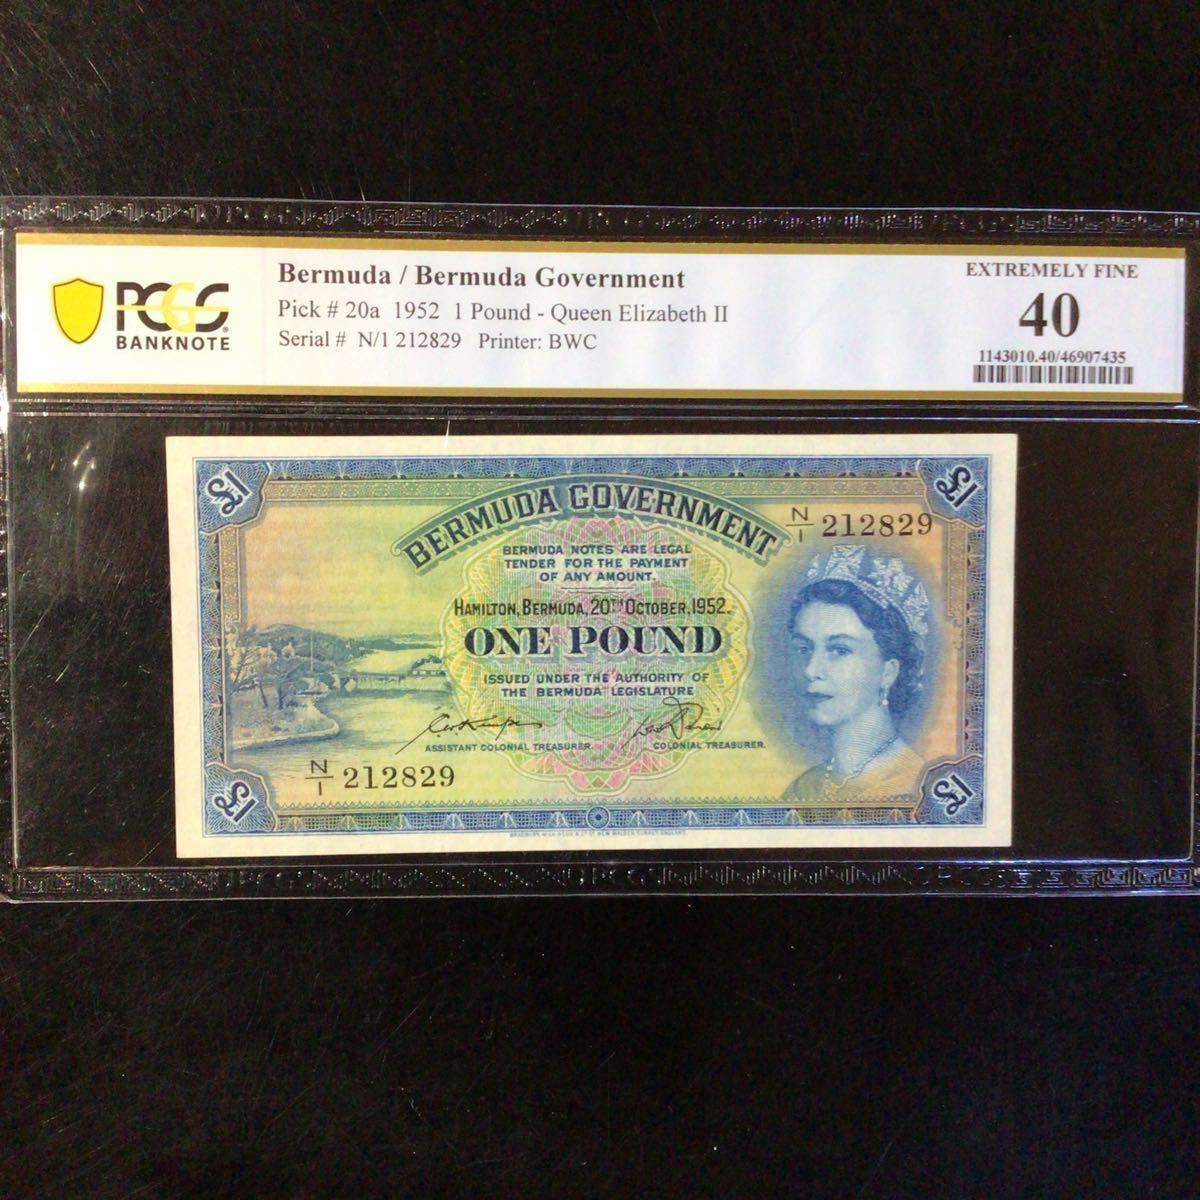 World Banknote Grading BERMUDA《Bermuda Government》1 Pound【1952】『PCGS Grading Extremely Fine 40』